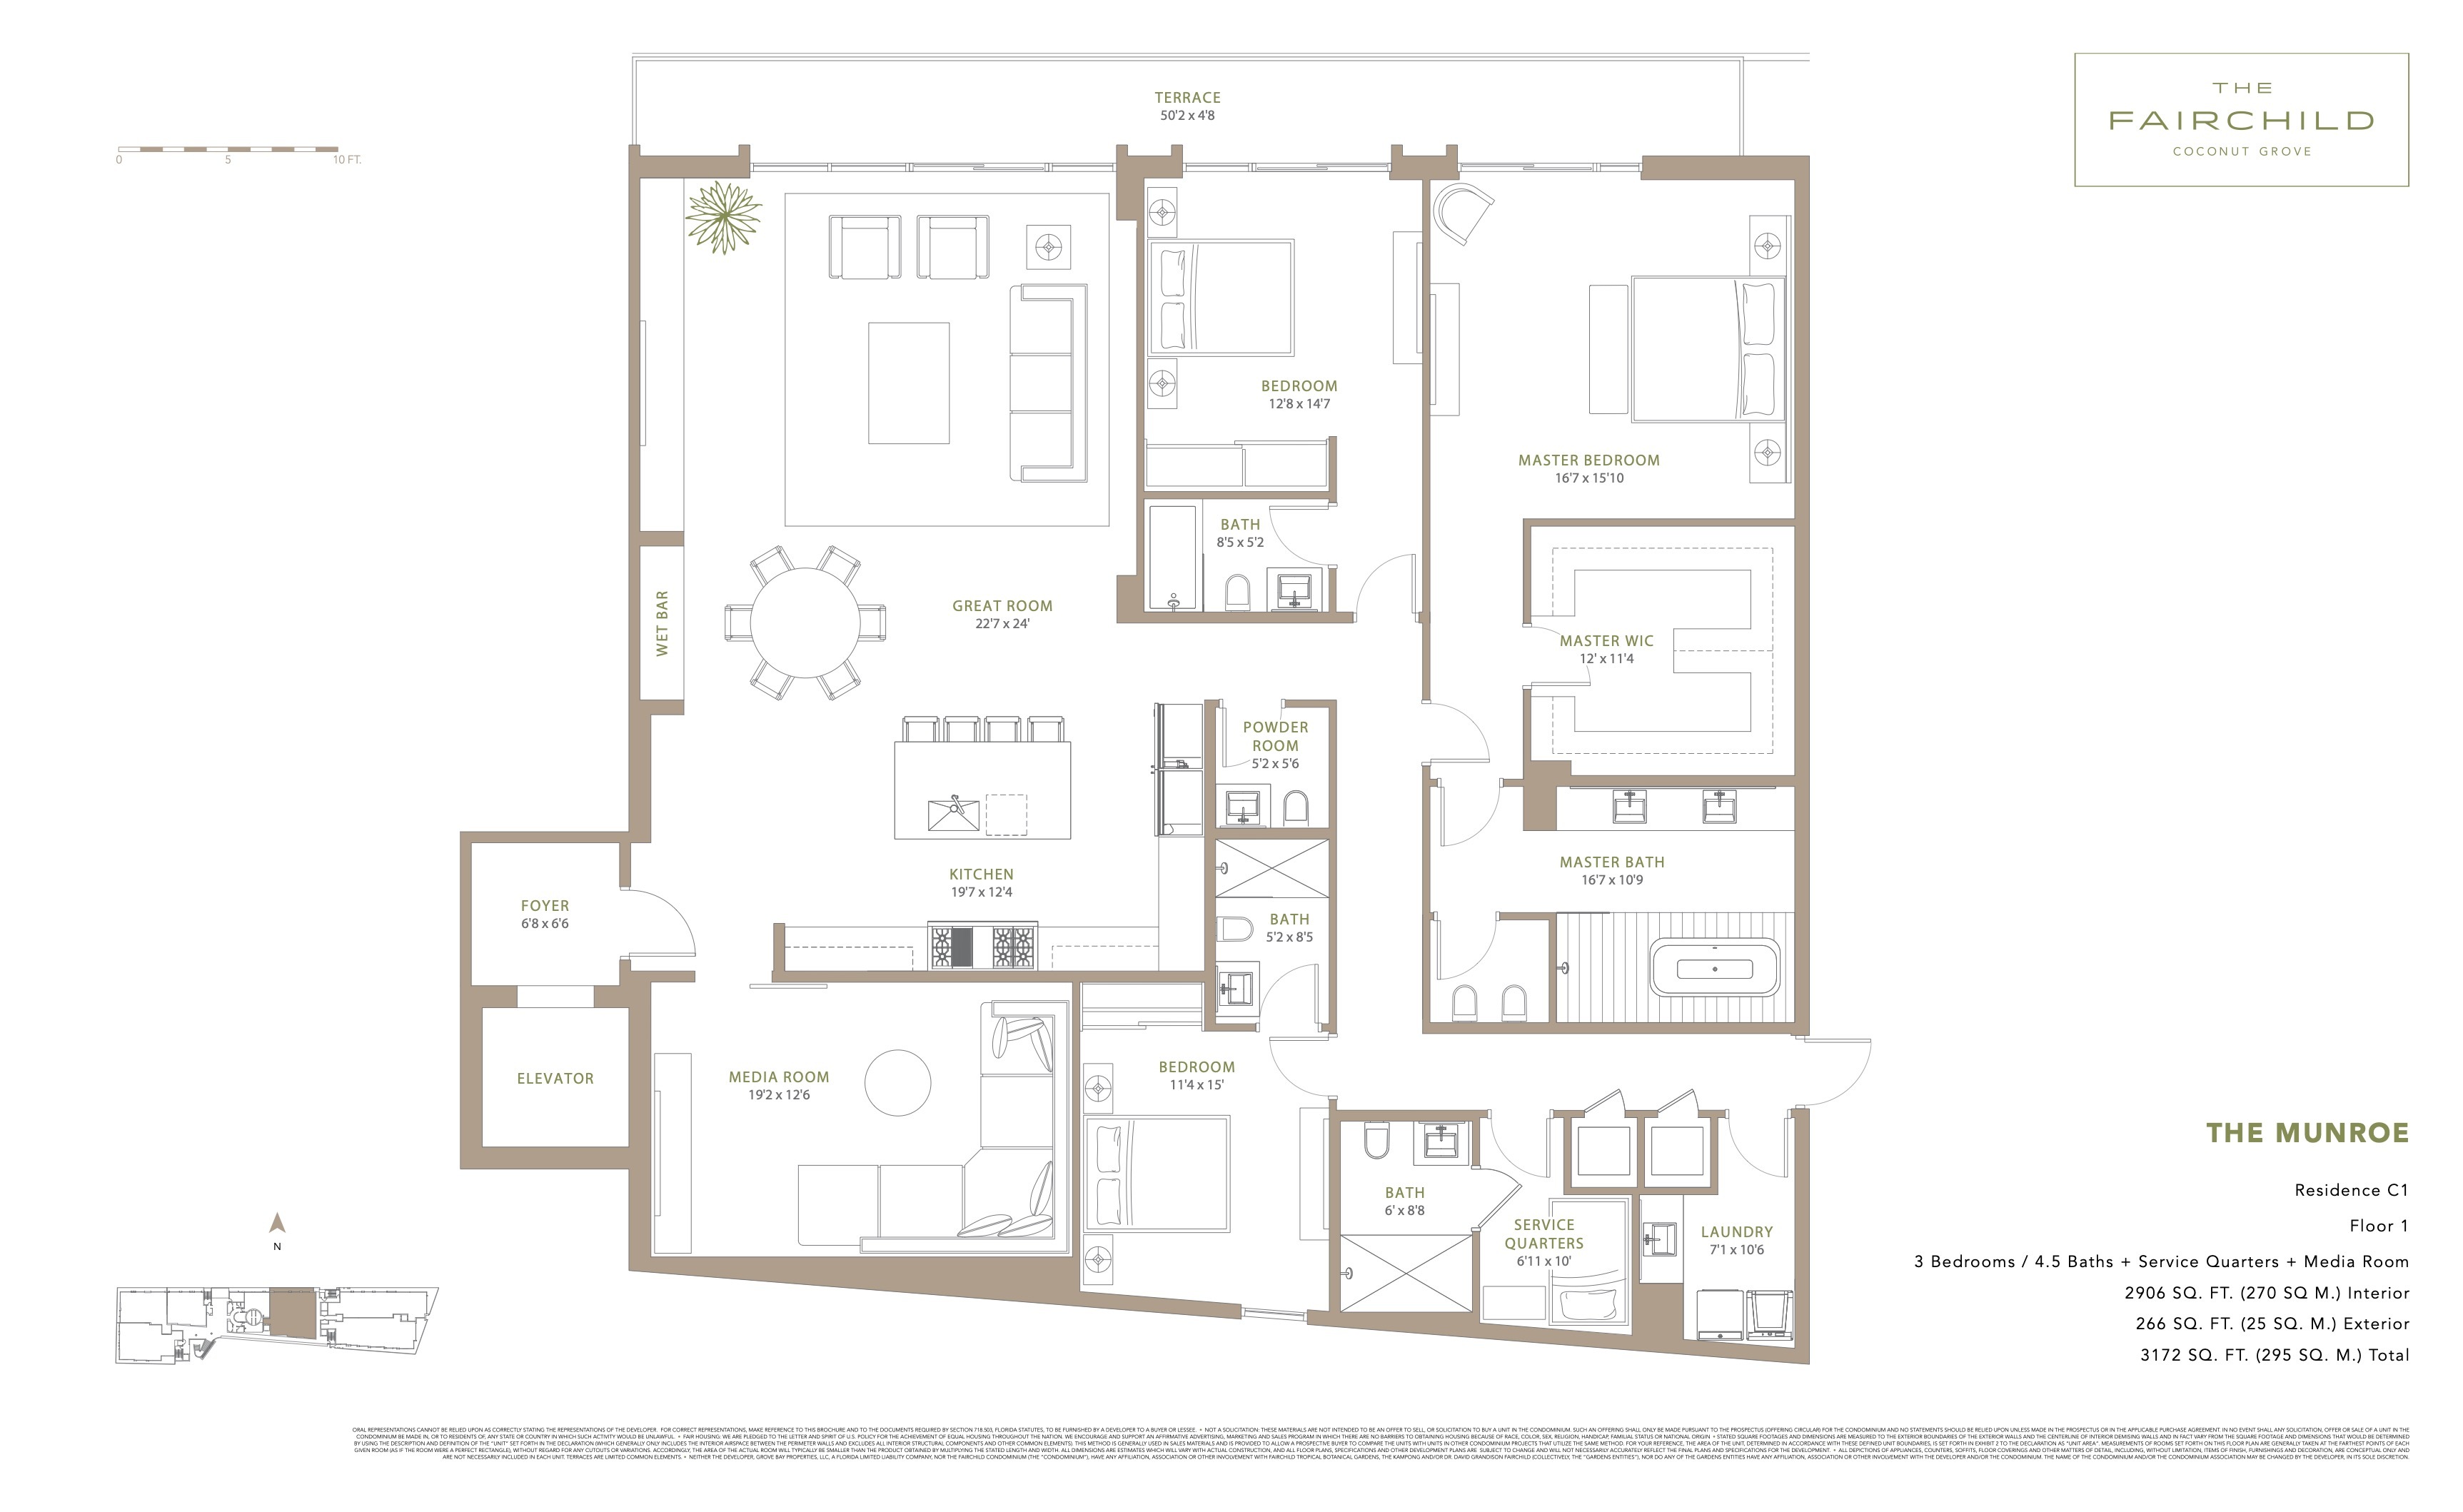 Floor Plan for The Fairchild Coconut Grove Floorplans, The Munroe